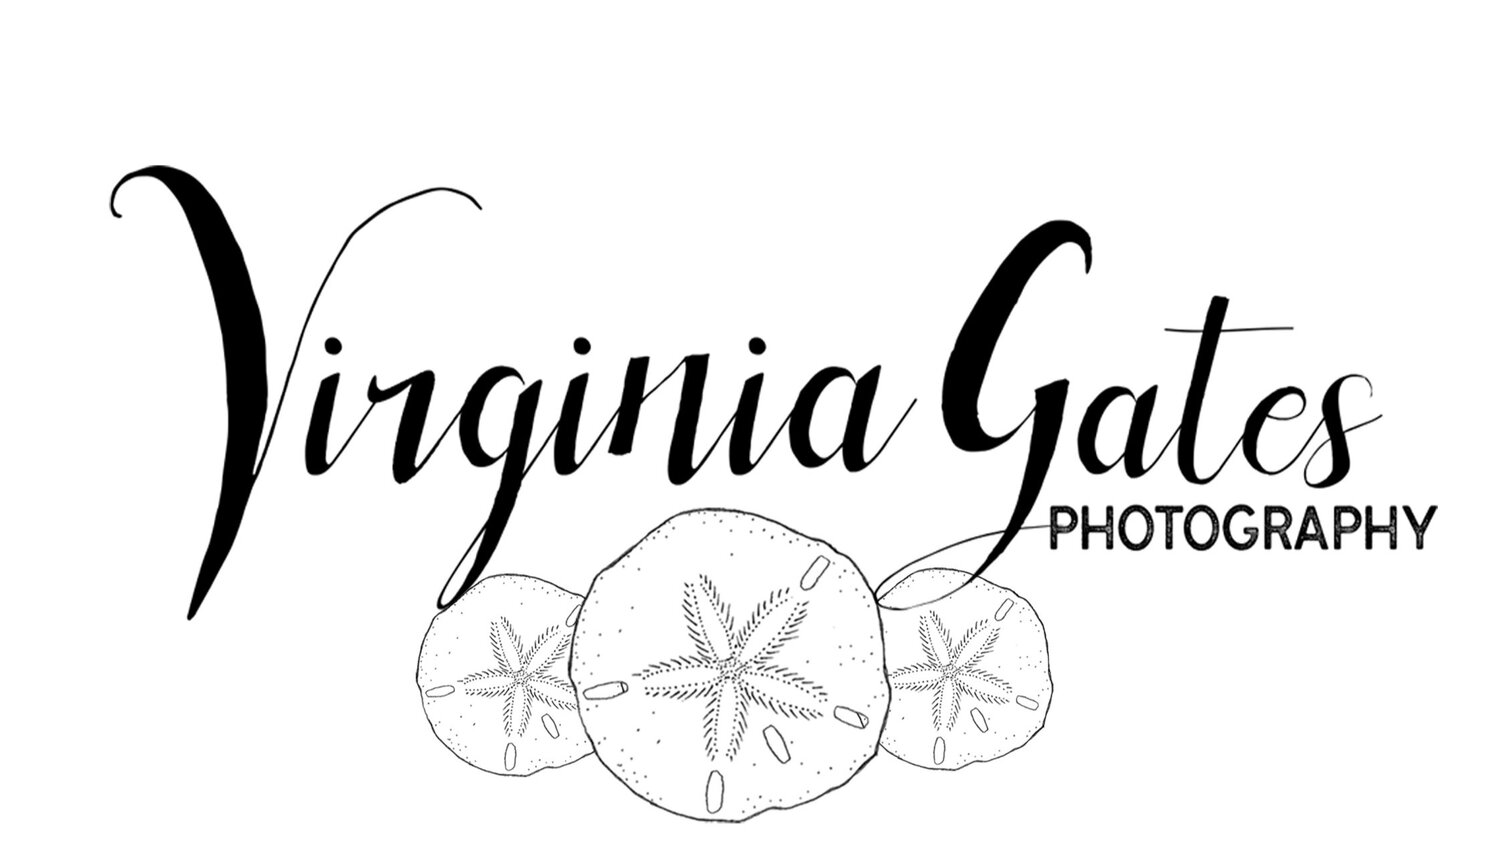  Virginia Gates Photography | Wilmington, NC Photographer | 910-233-8227 